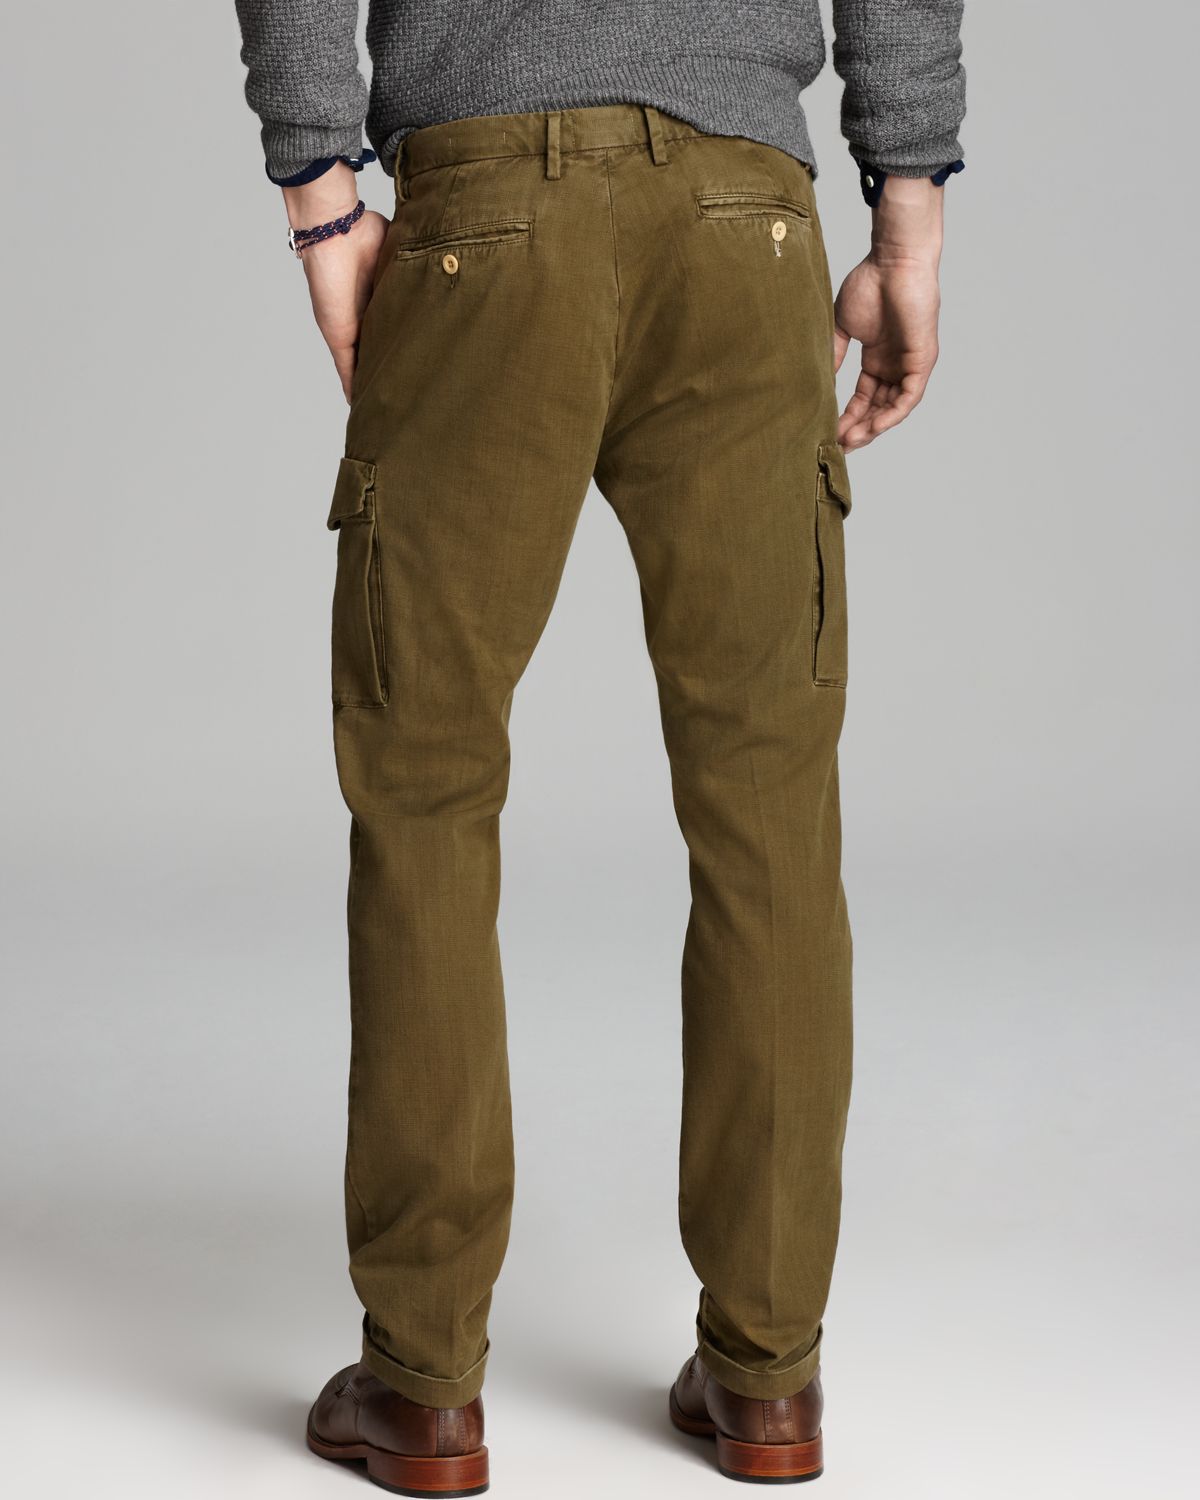 Gant Rugger Canvas Cargo Pants in Green (Natural) for Men - Lyst